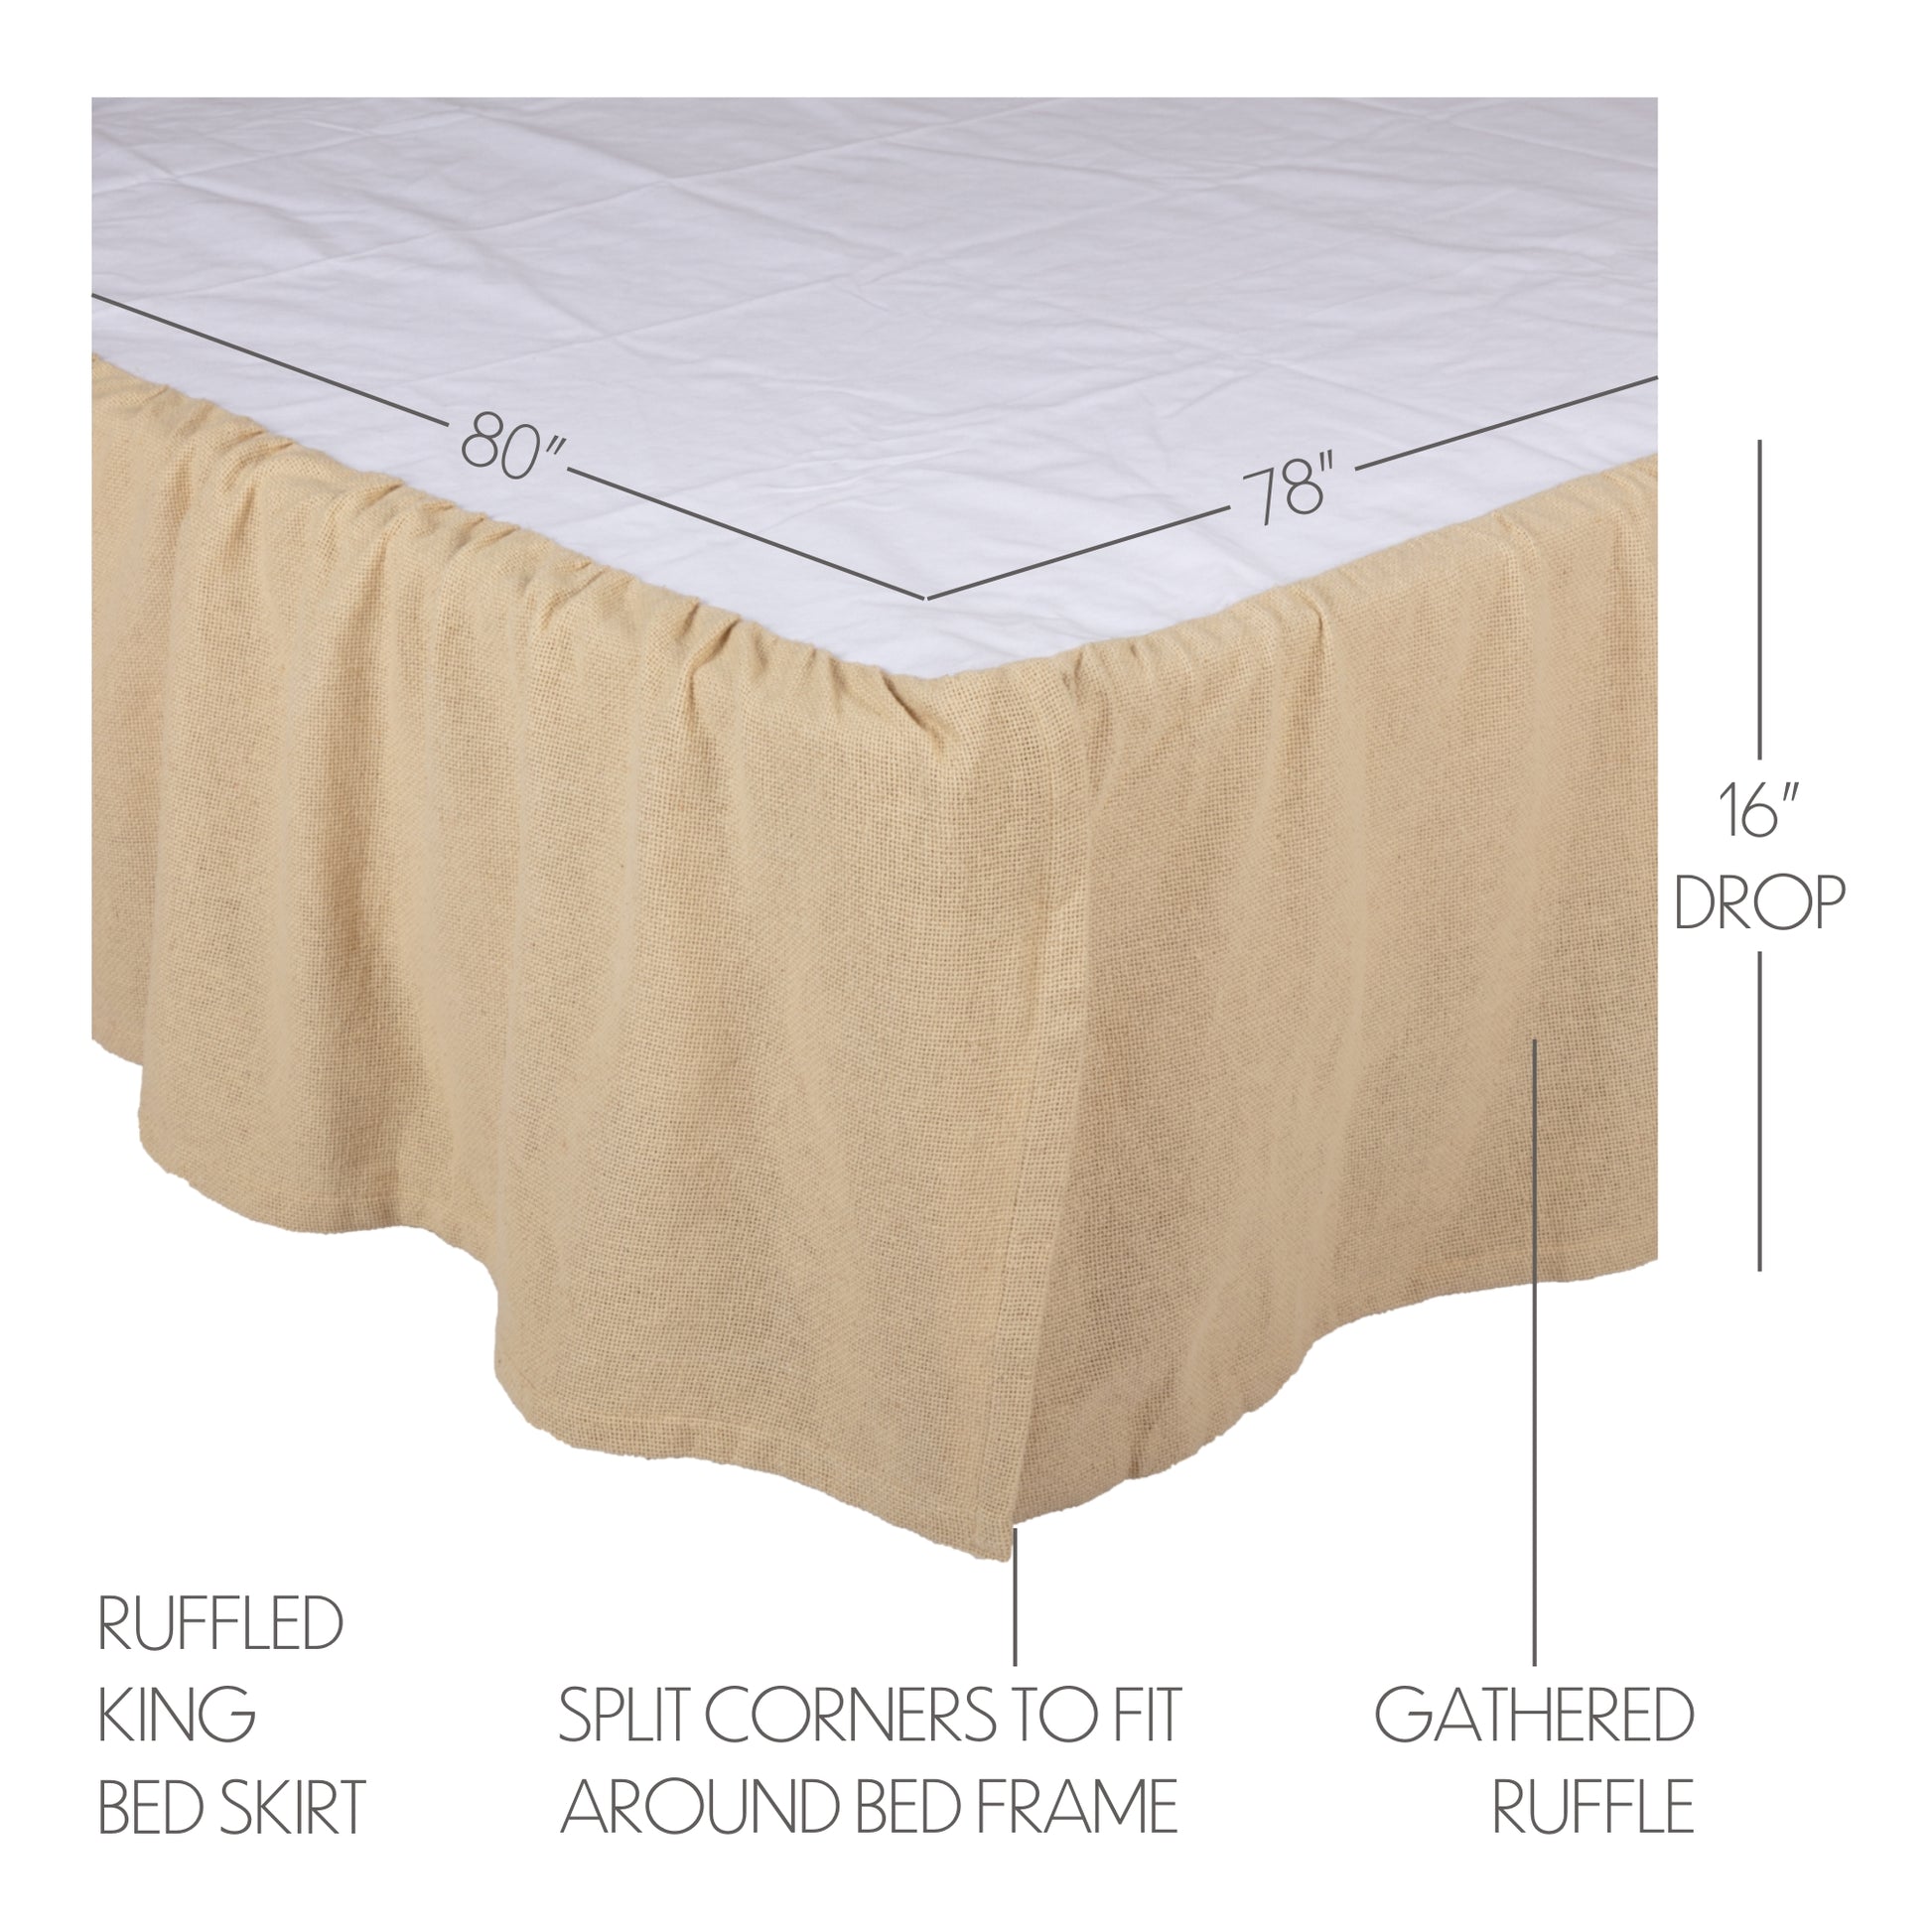 51799-Burlap-Vintage-Ruffled-King-Bed-Skirt-78x80x16-image-1